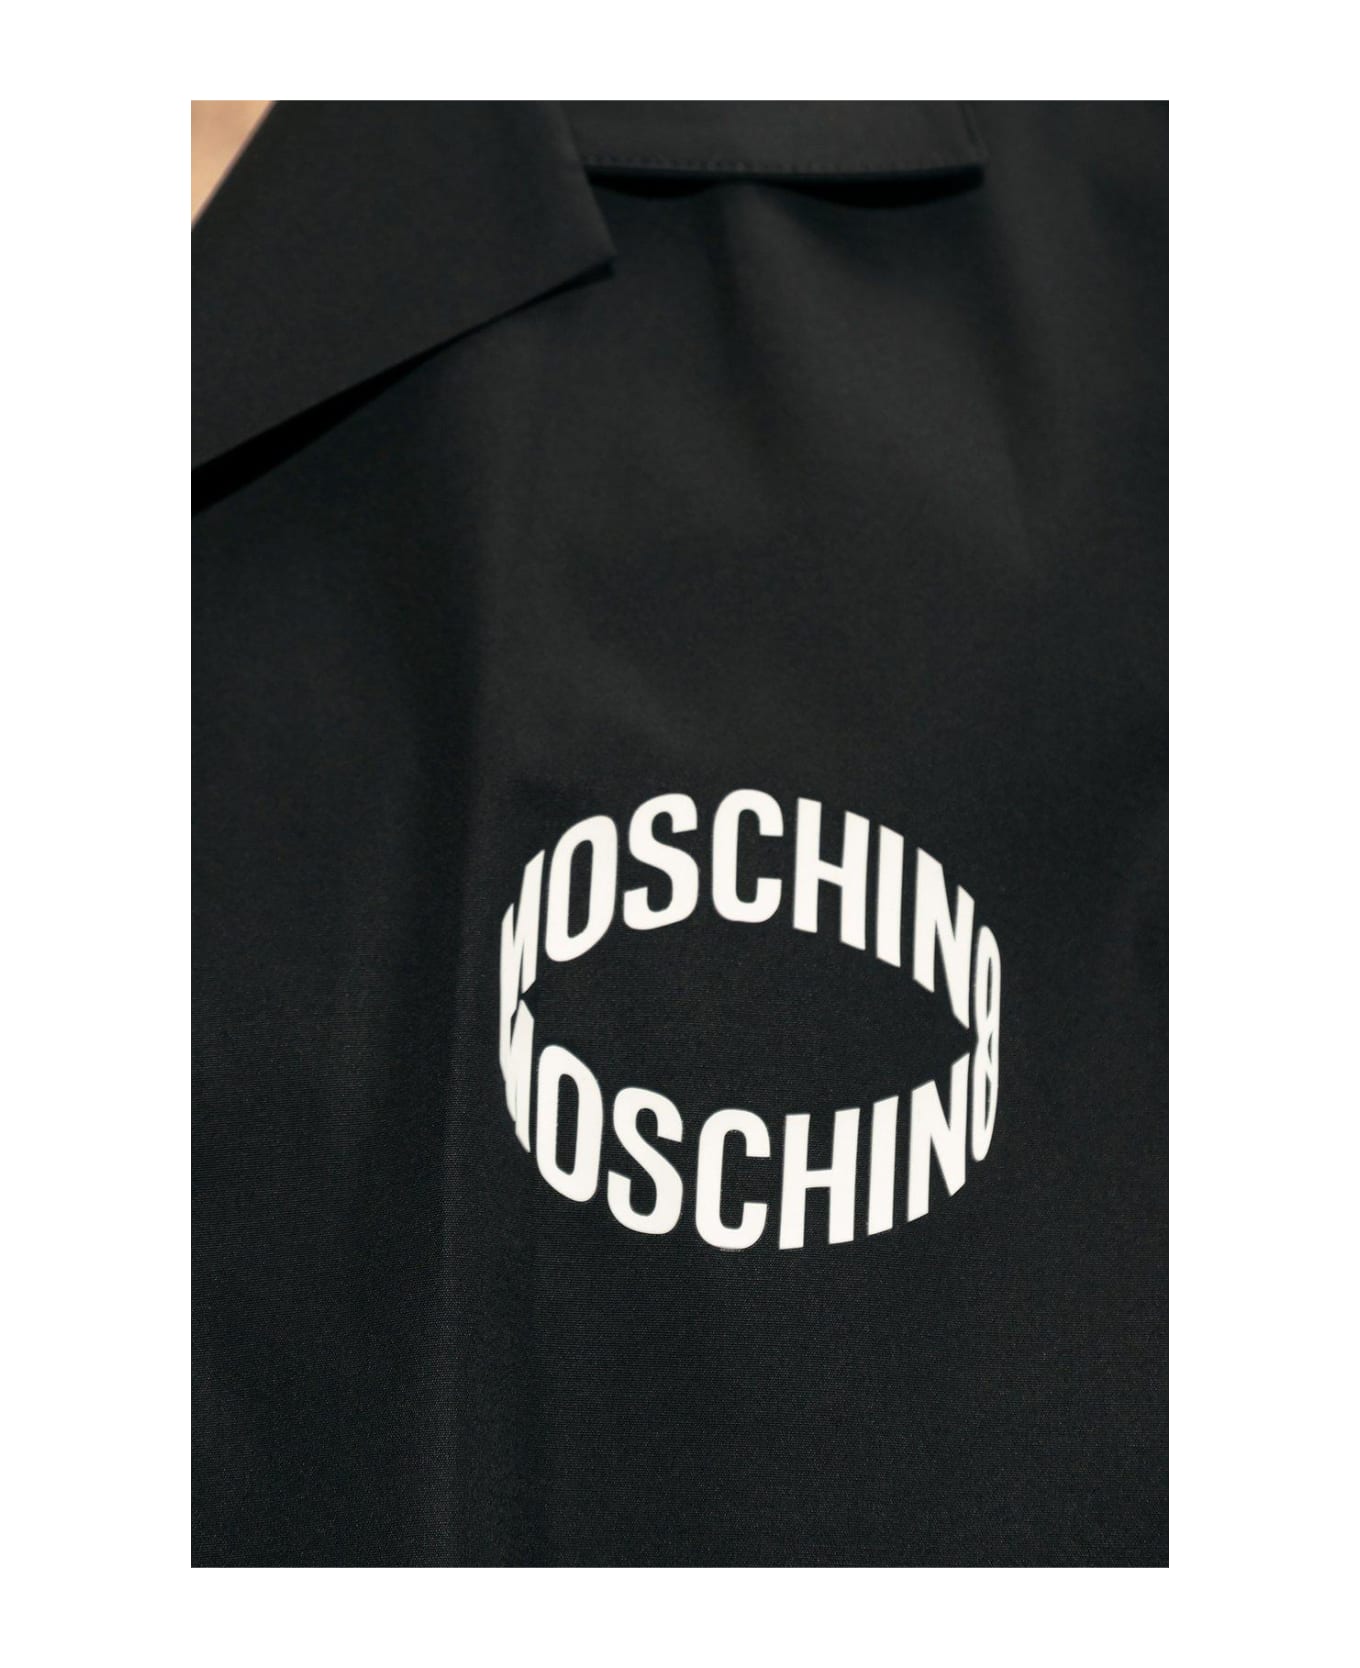 Moschino Logo Buttoned Shirt - Black